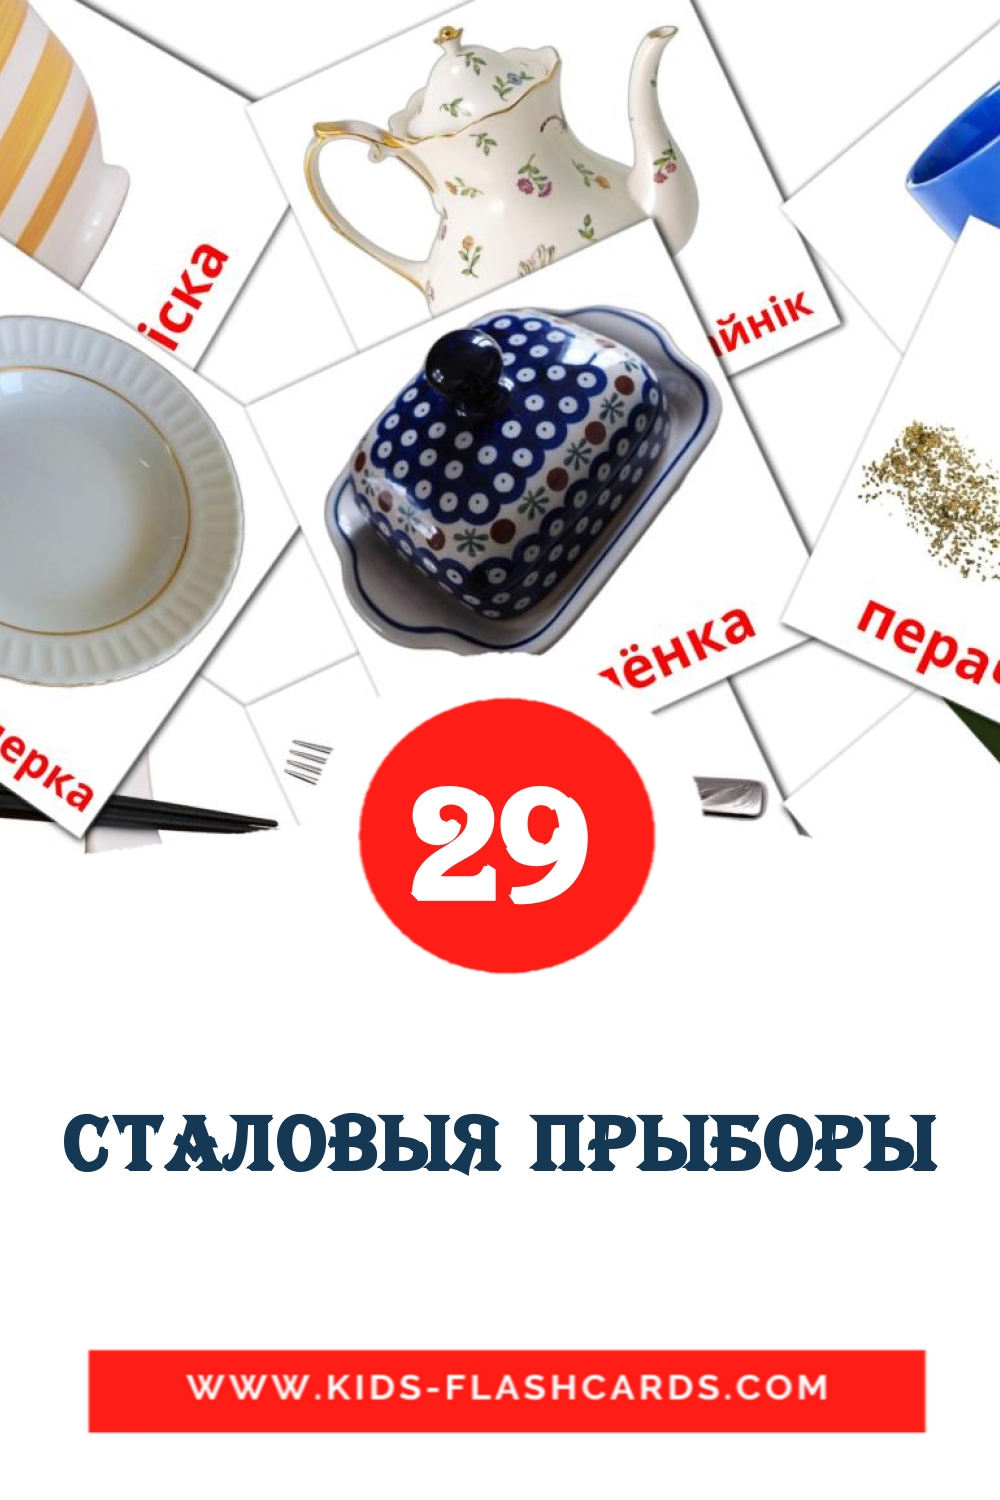 29 carte illustrate di Сталовыя прыборы per la scuola materna in bielorusso